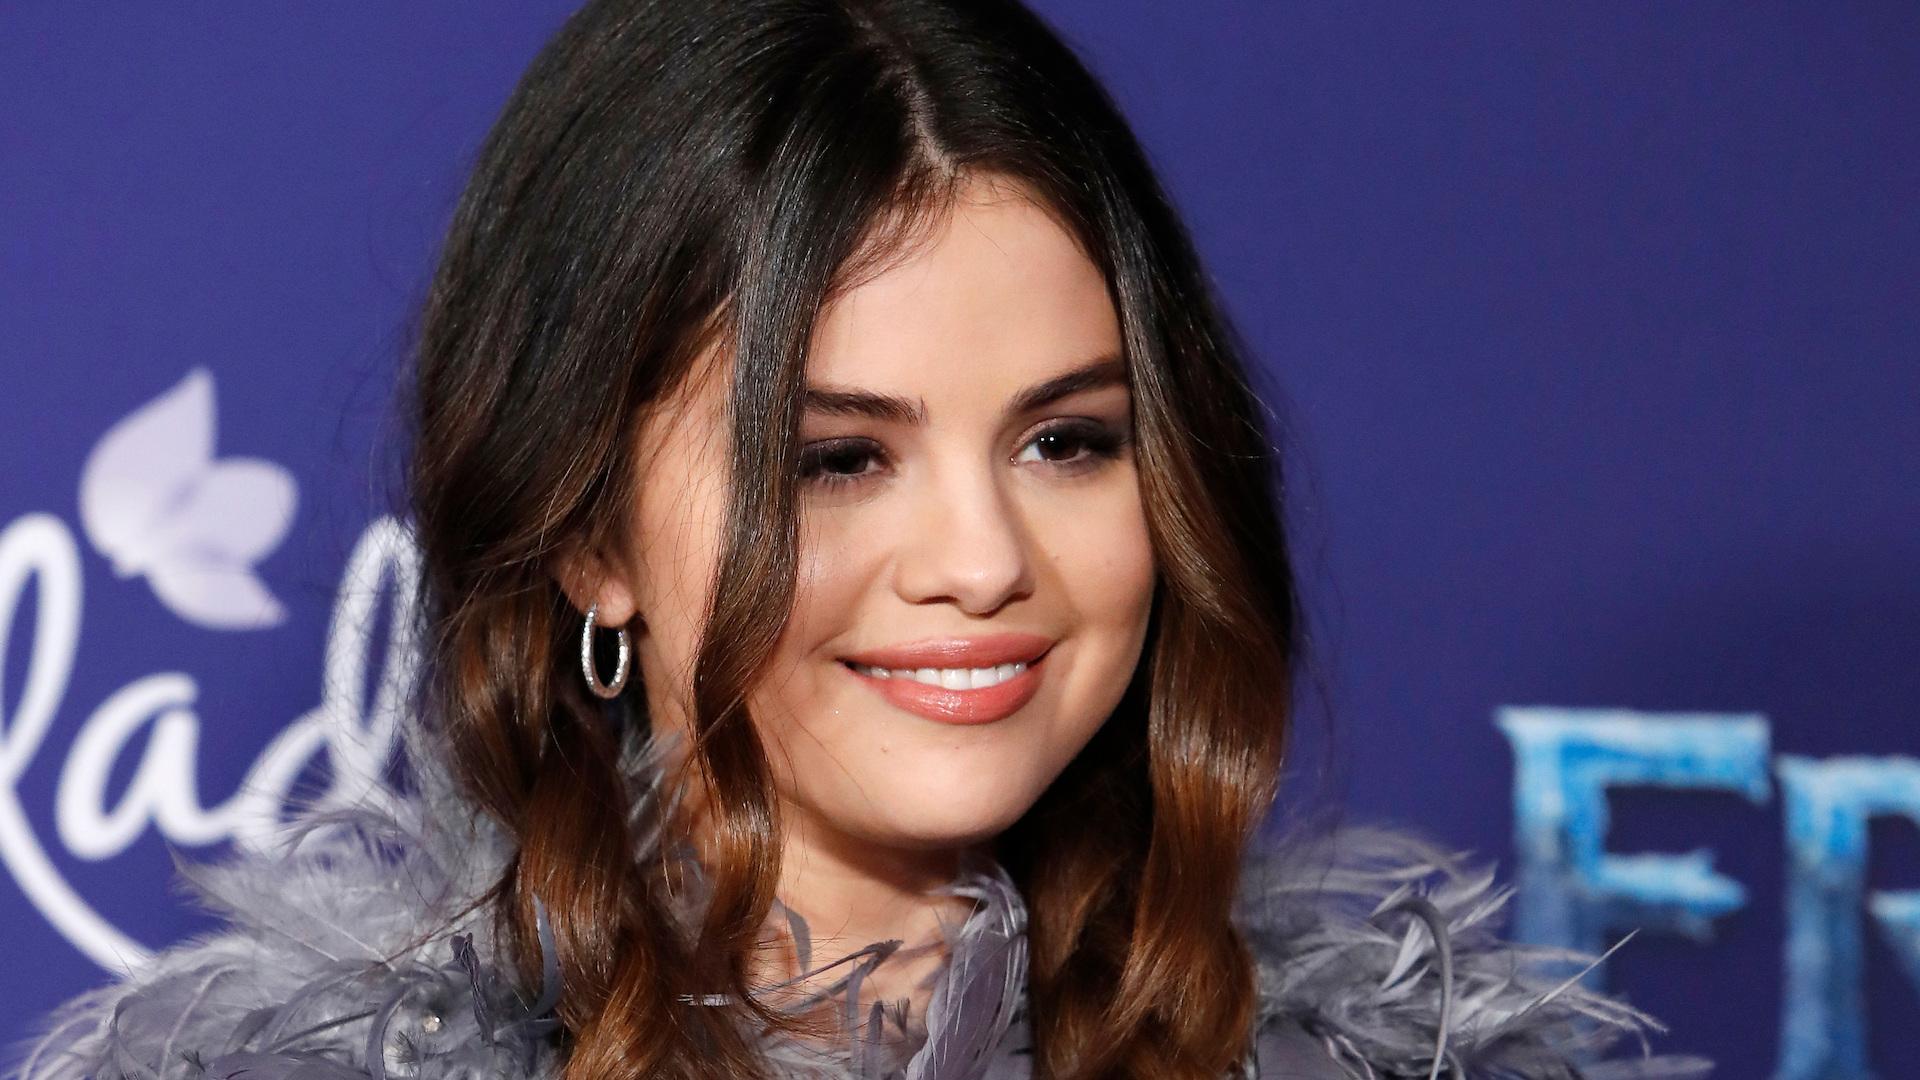 Selena Gomez's 2020 Album Release Date Is Sooner Than Expected